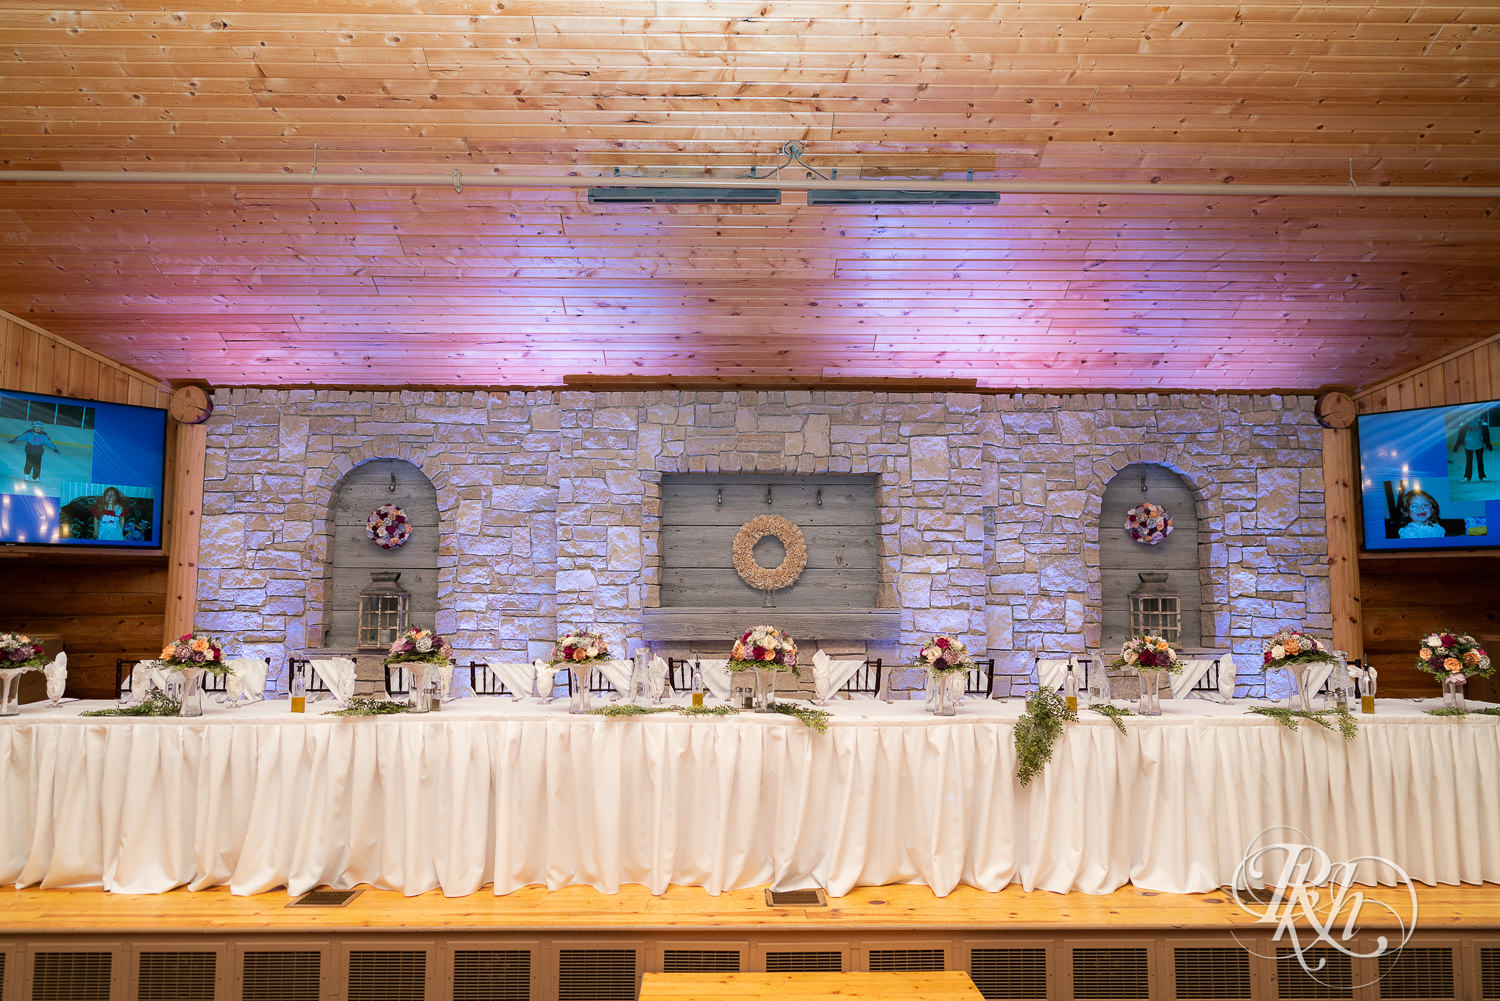 Reception setup for winter wedding at Glenhaven Events in Farmington, Minnesota.